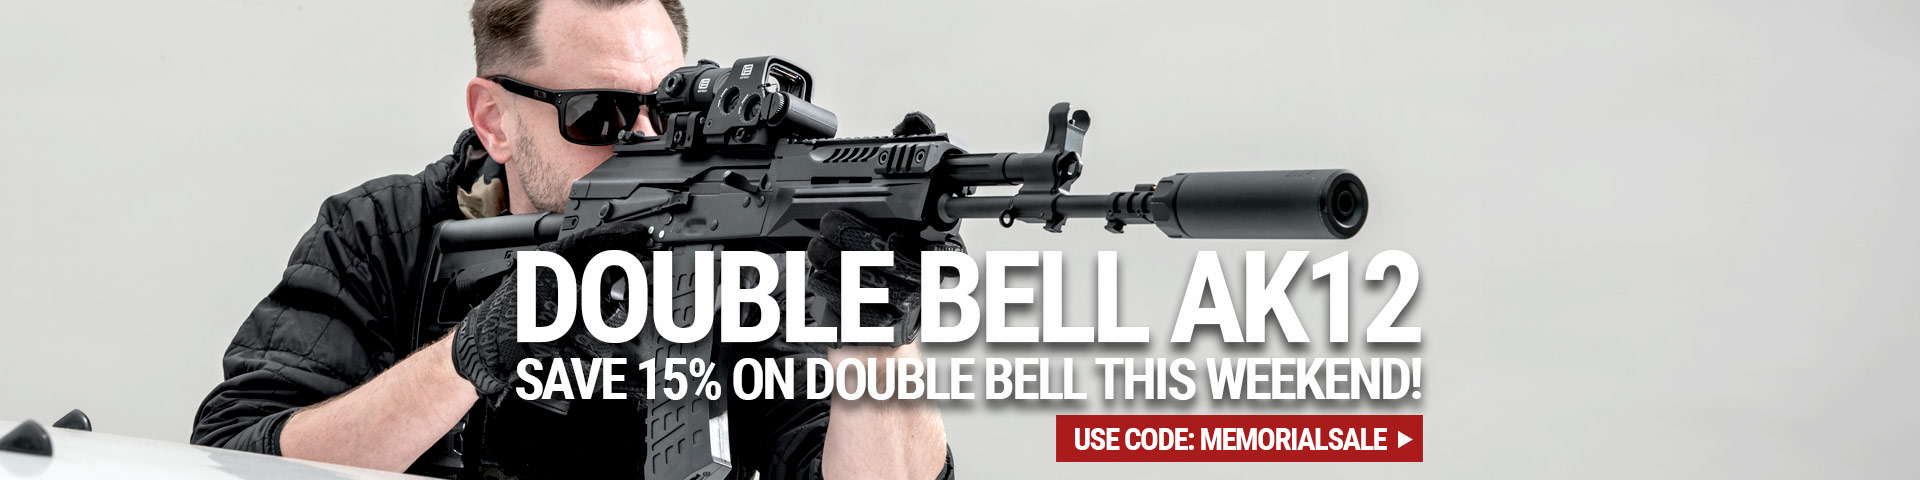 Double Bell AK12